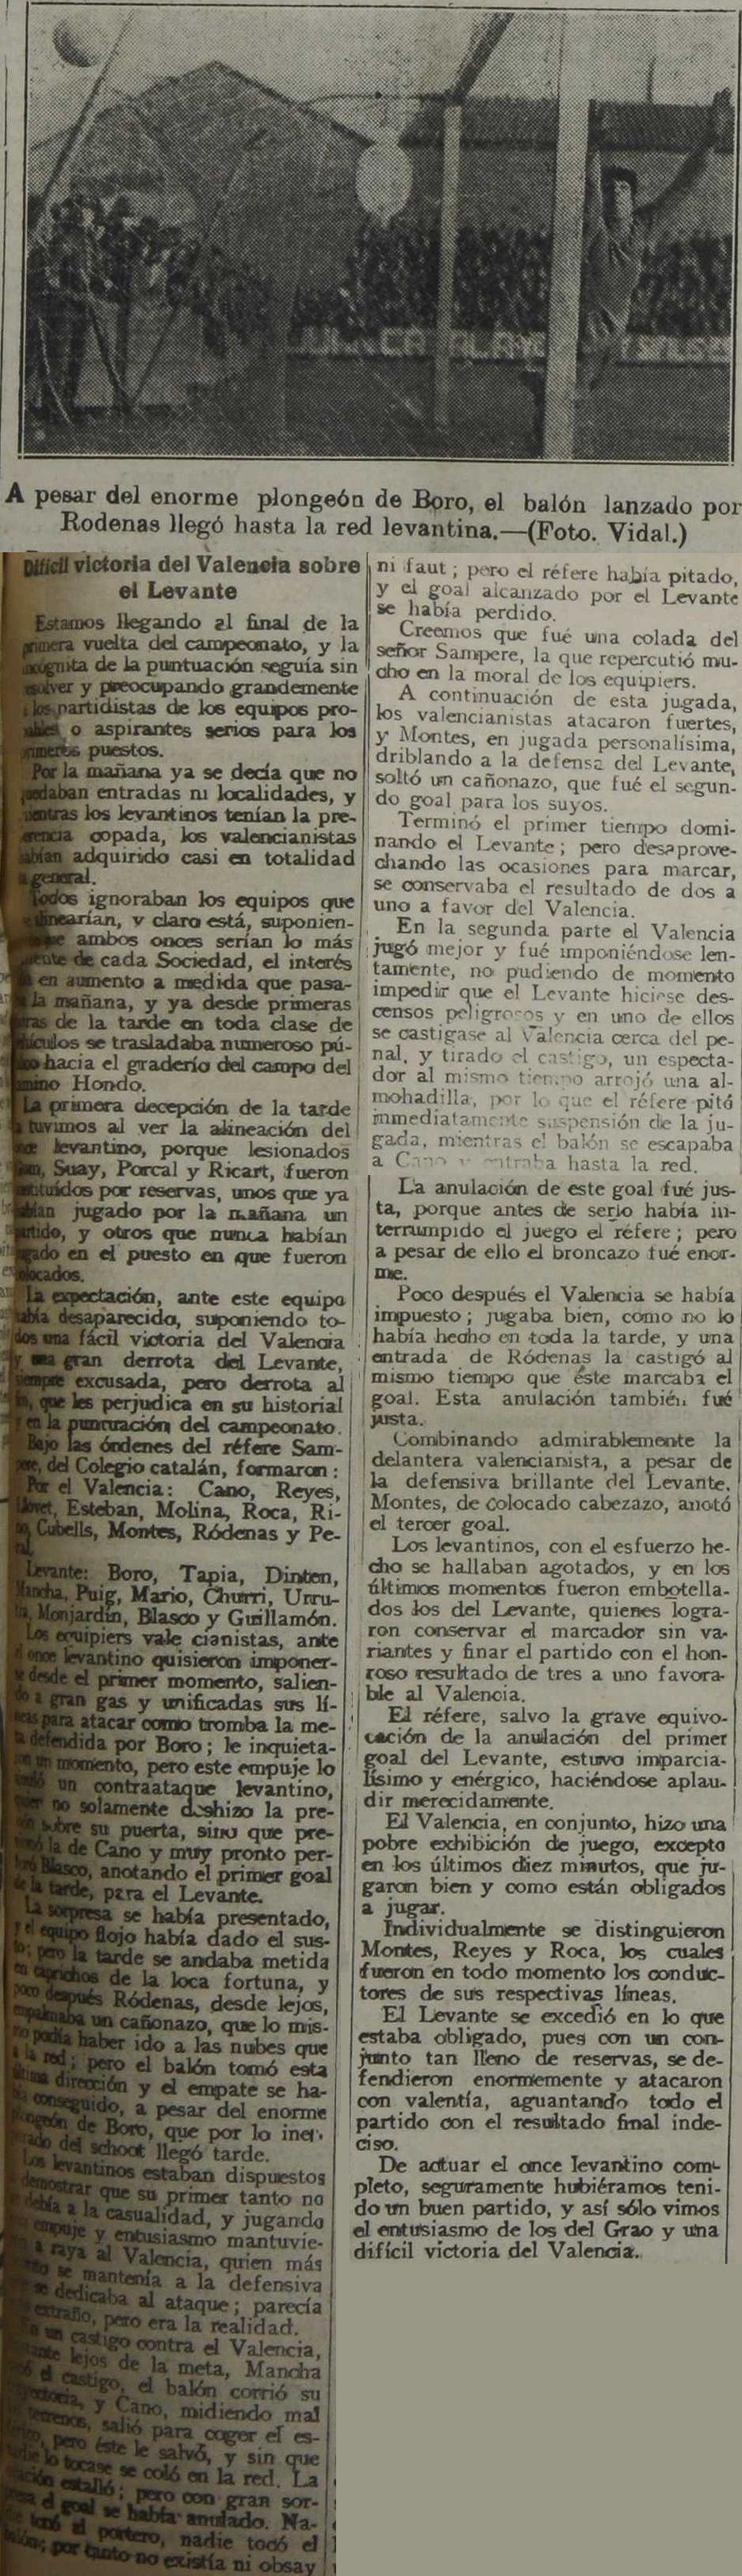 1925.11.29 (29 ноября 1925), Леванте - Валенсия, 1-3.jpg